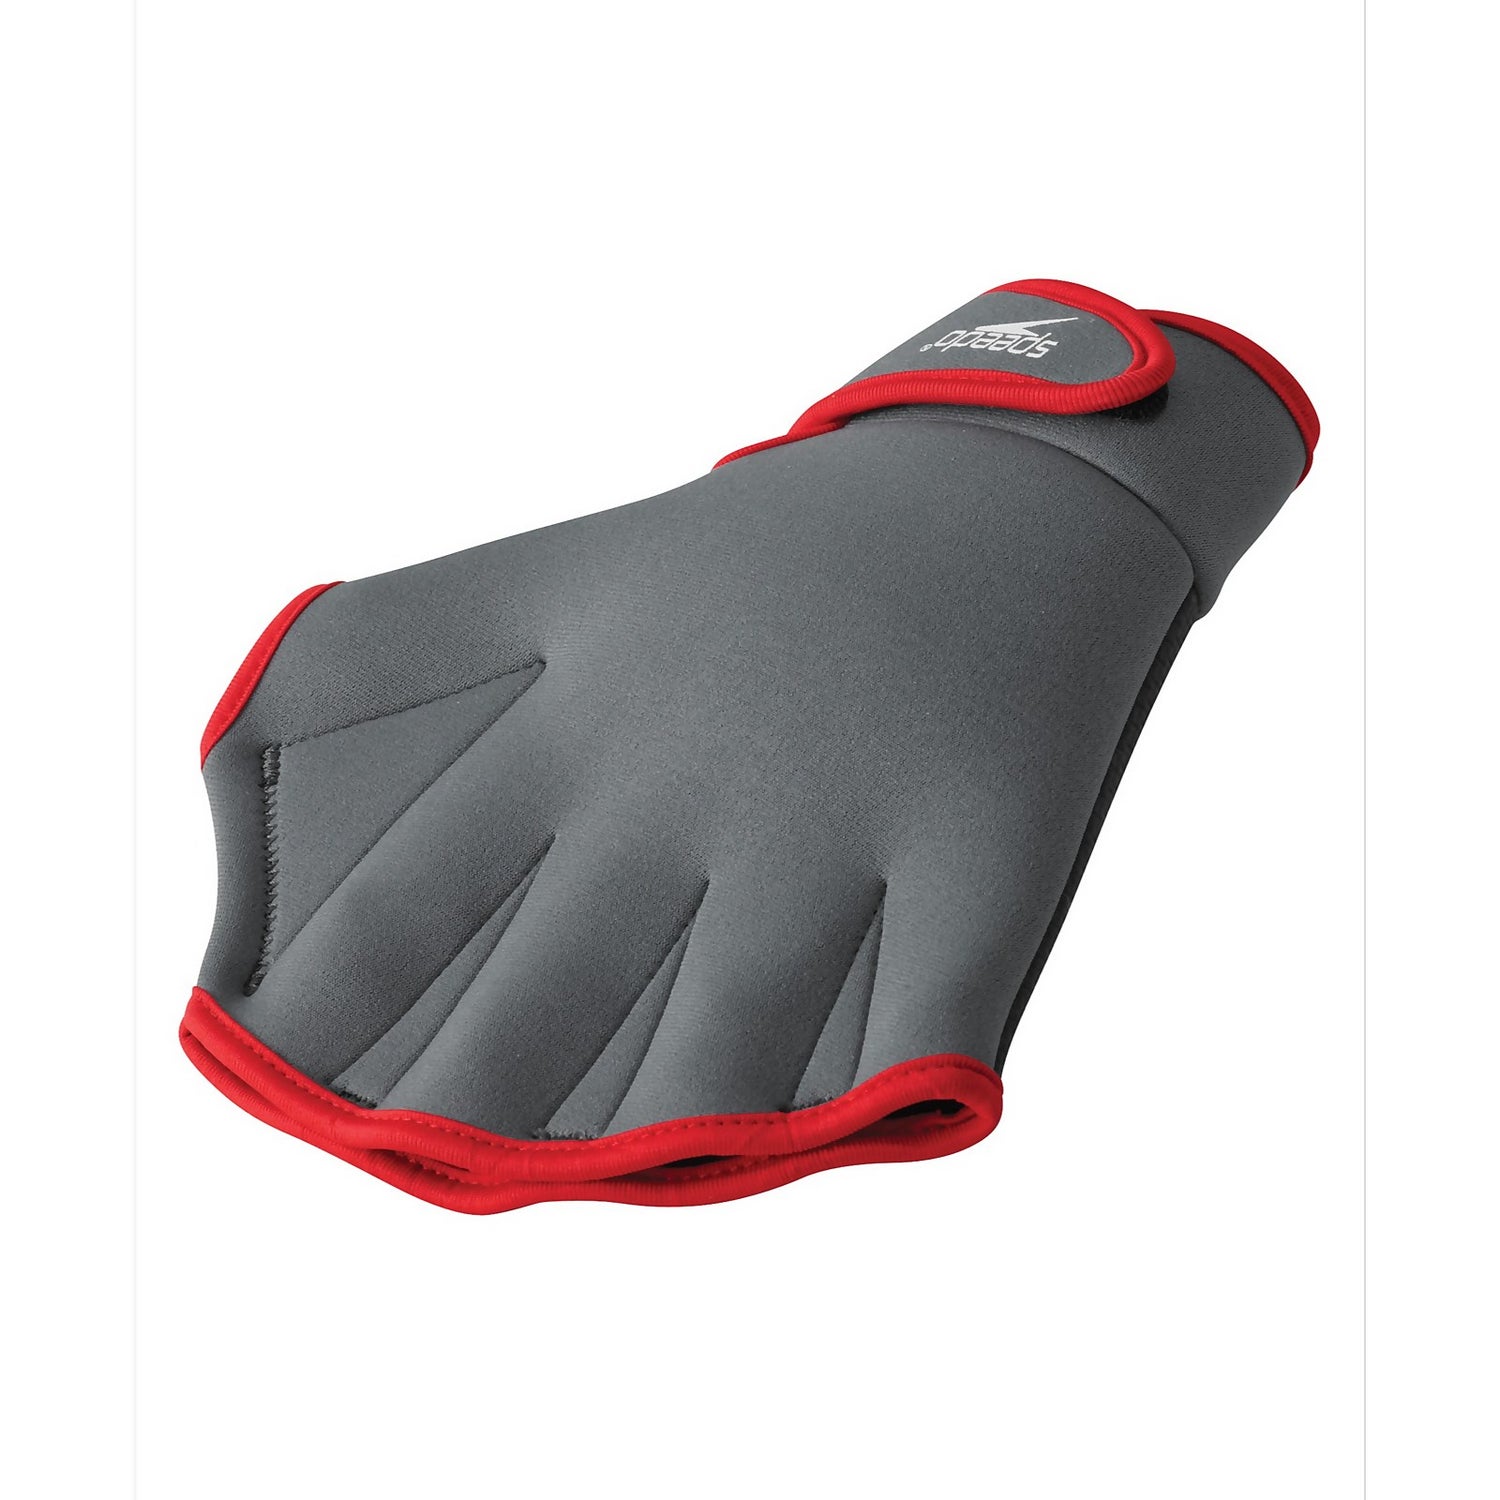 Aquatic Fitness Gloves Speedo USA